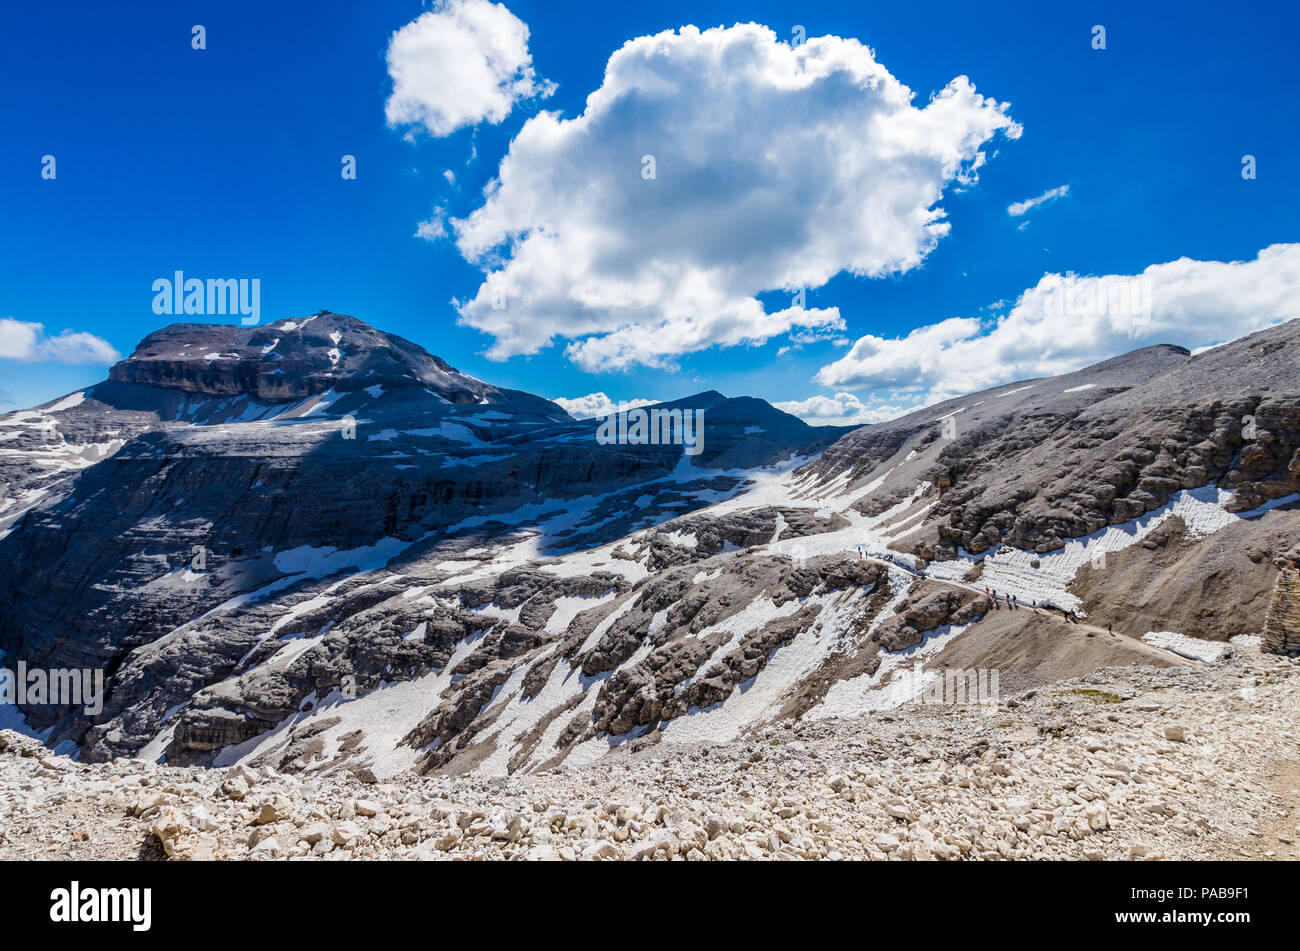 Piz Boe peak, 3152 m, in Sella massif, Dolomiti, Italy. View of rocky landscape from the hiking path. Stock Photo